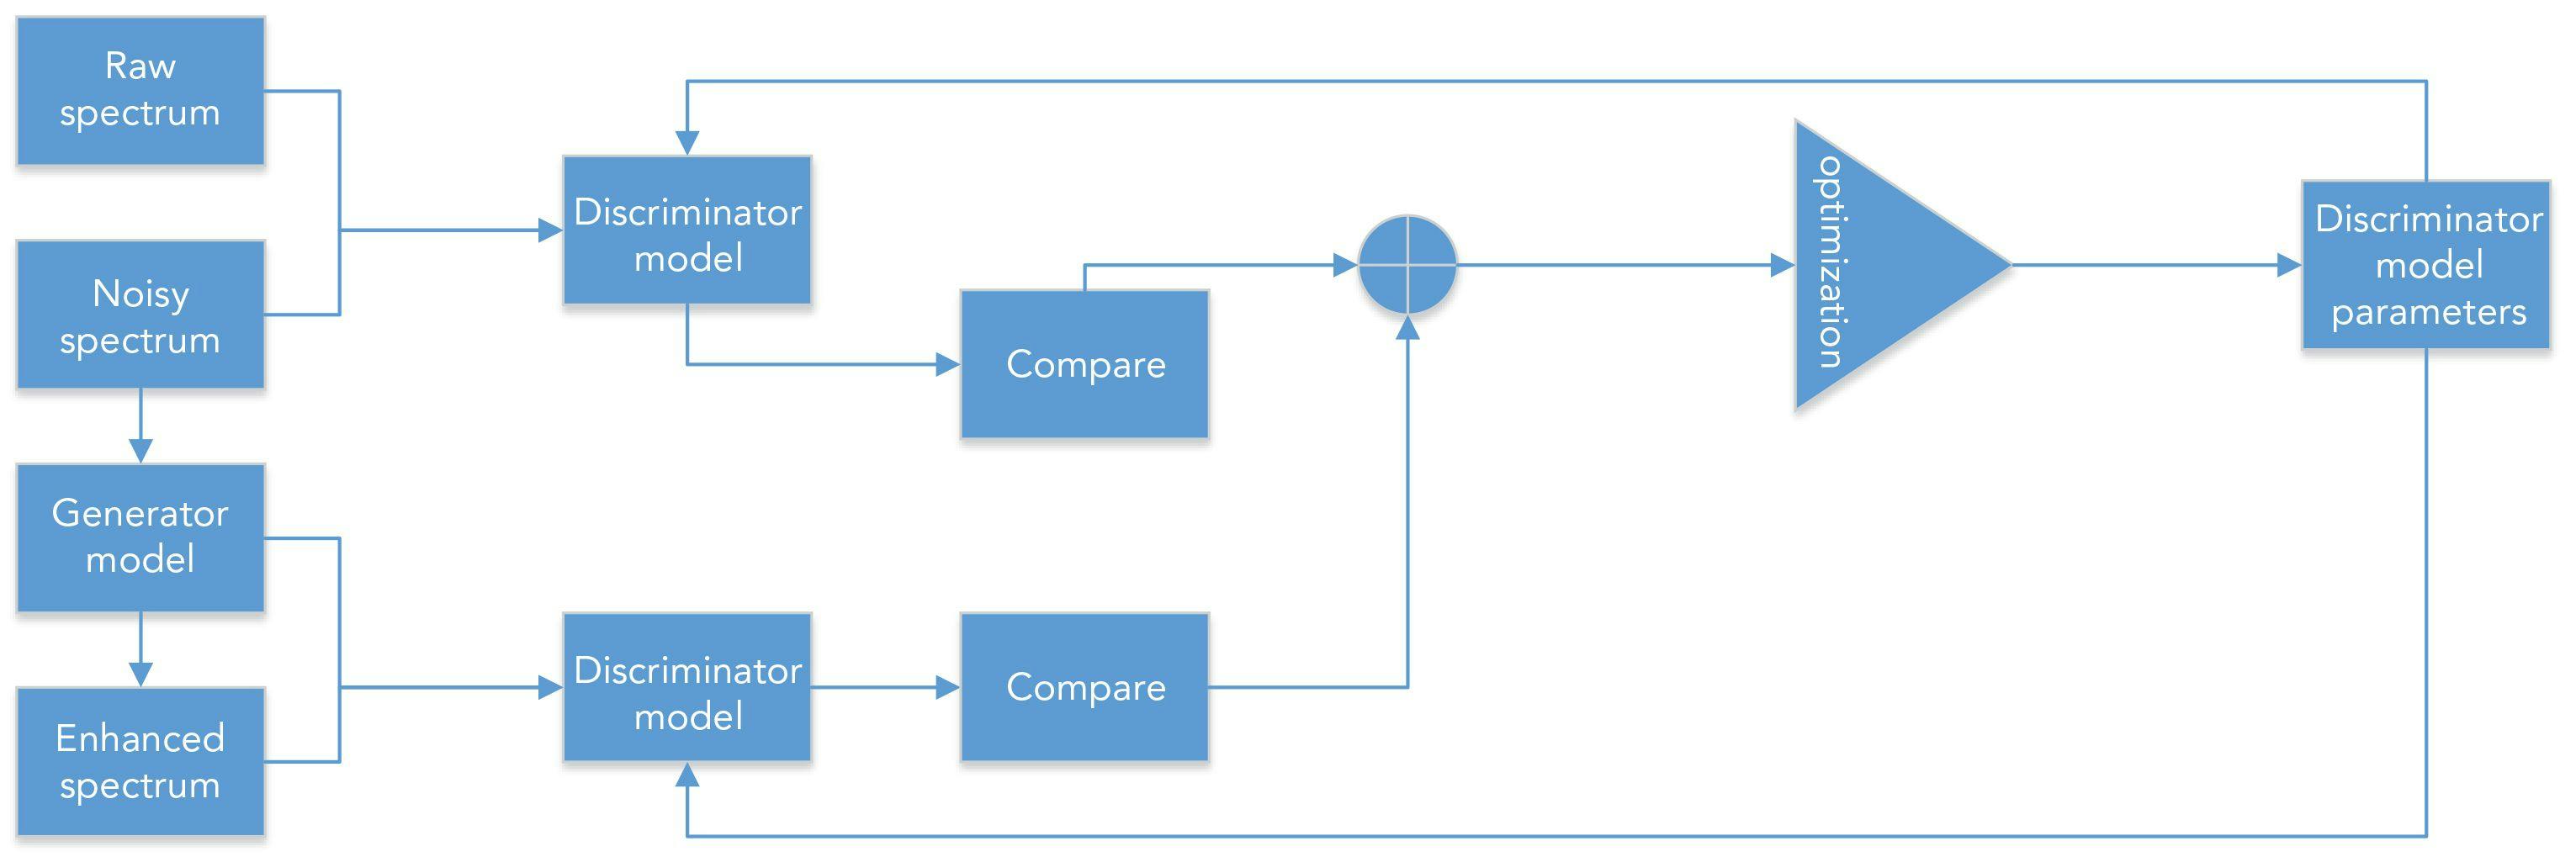 FIGURE 6: Flowchart showing the decision-making discriminator model optimization process.